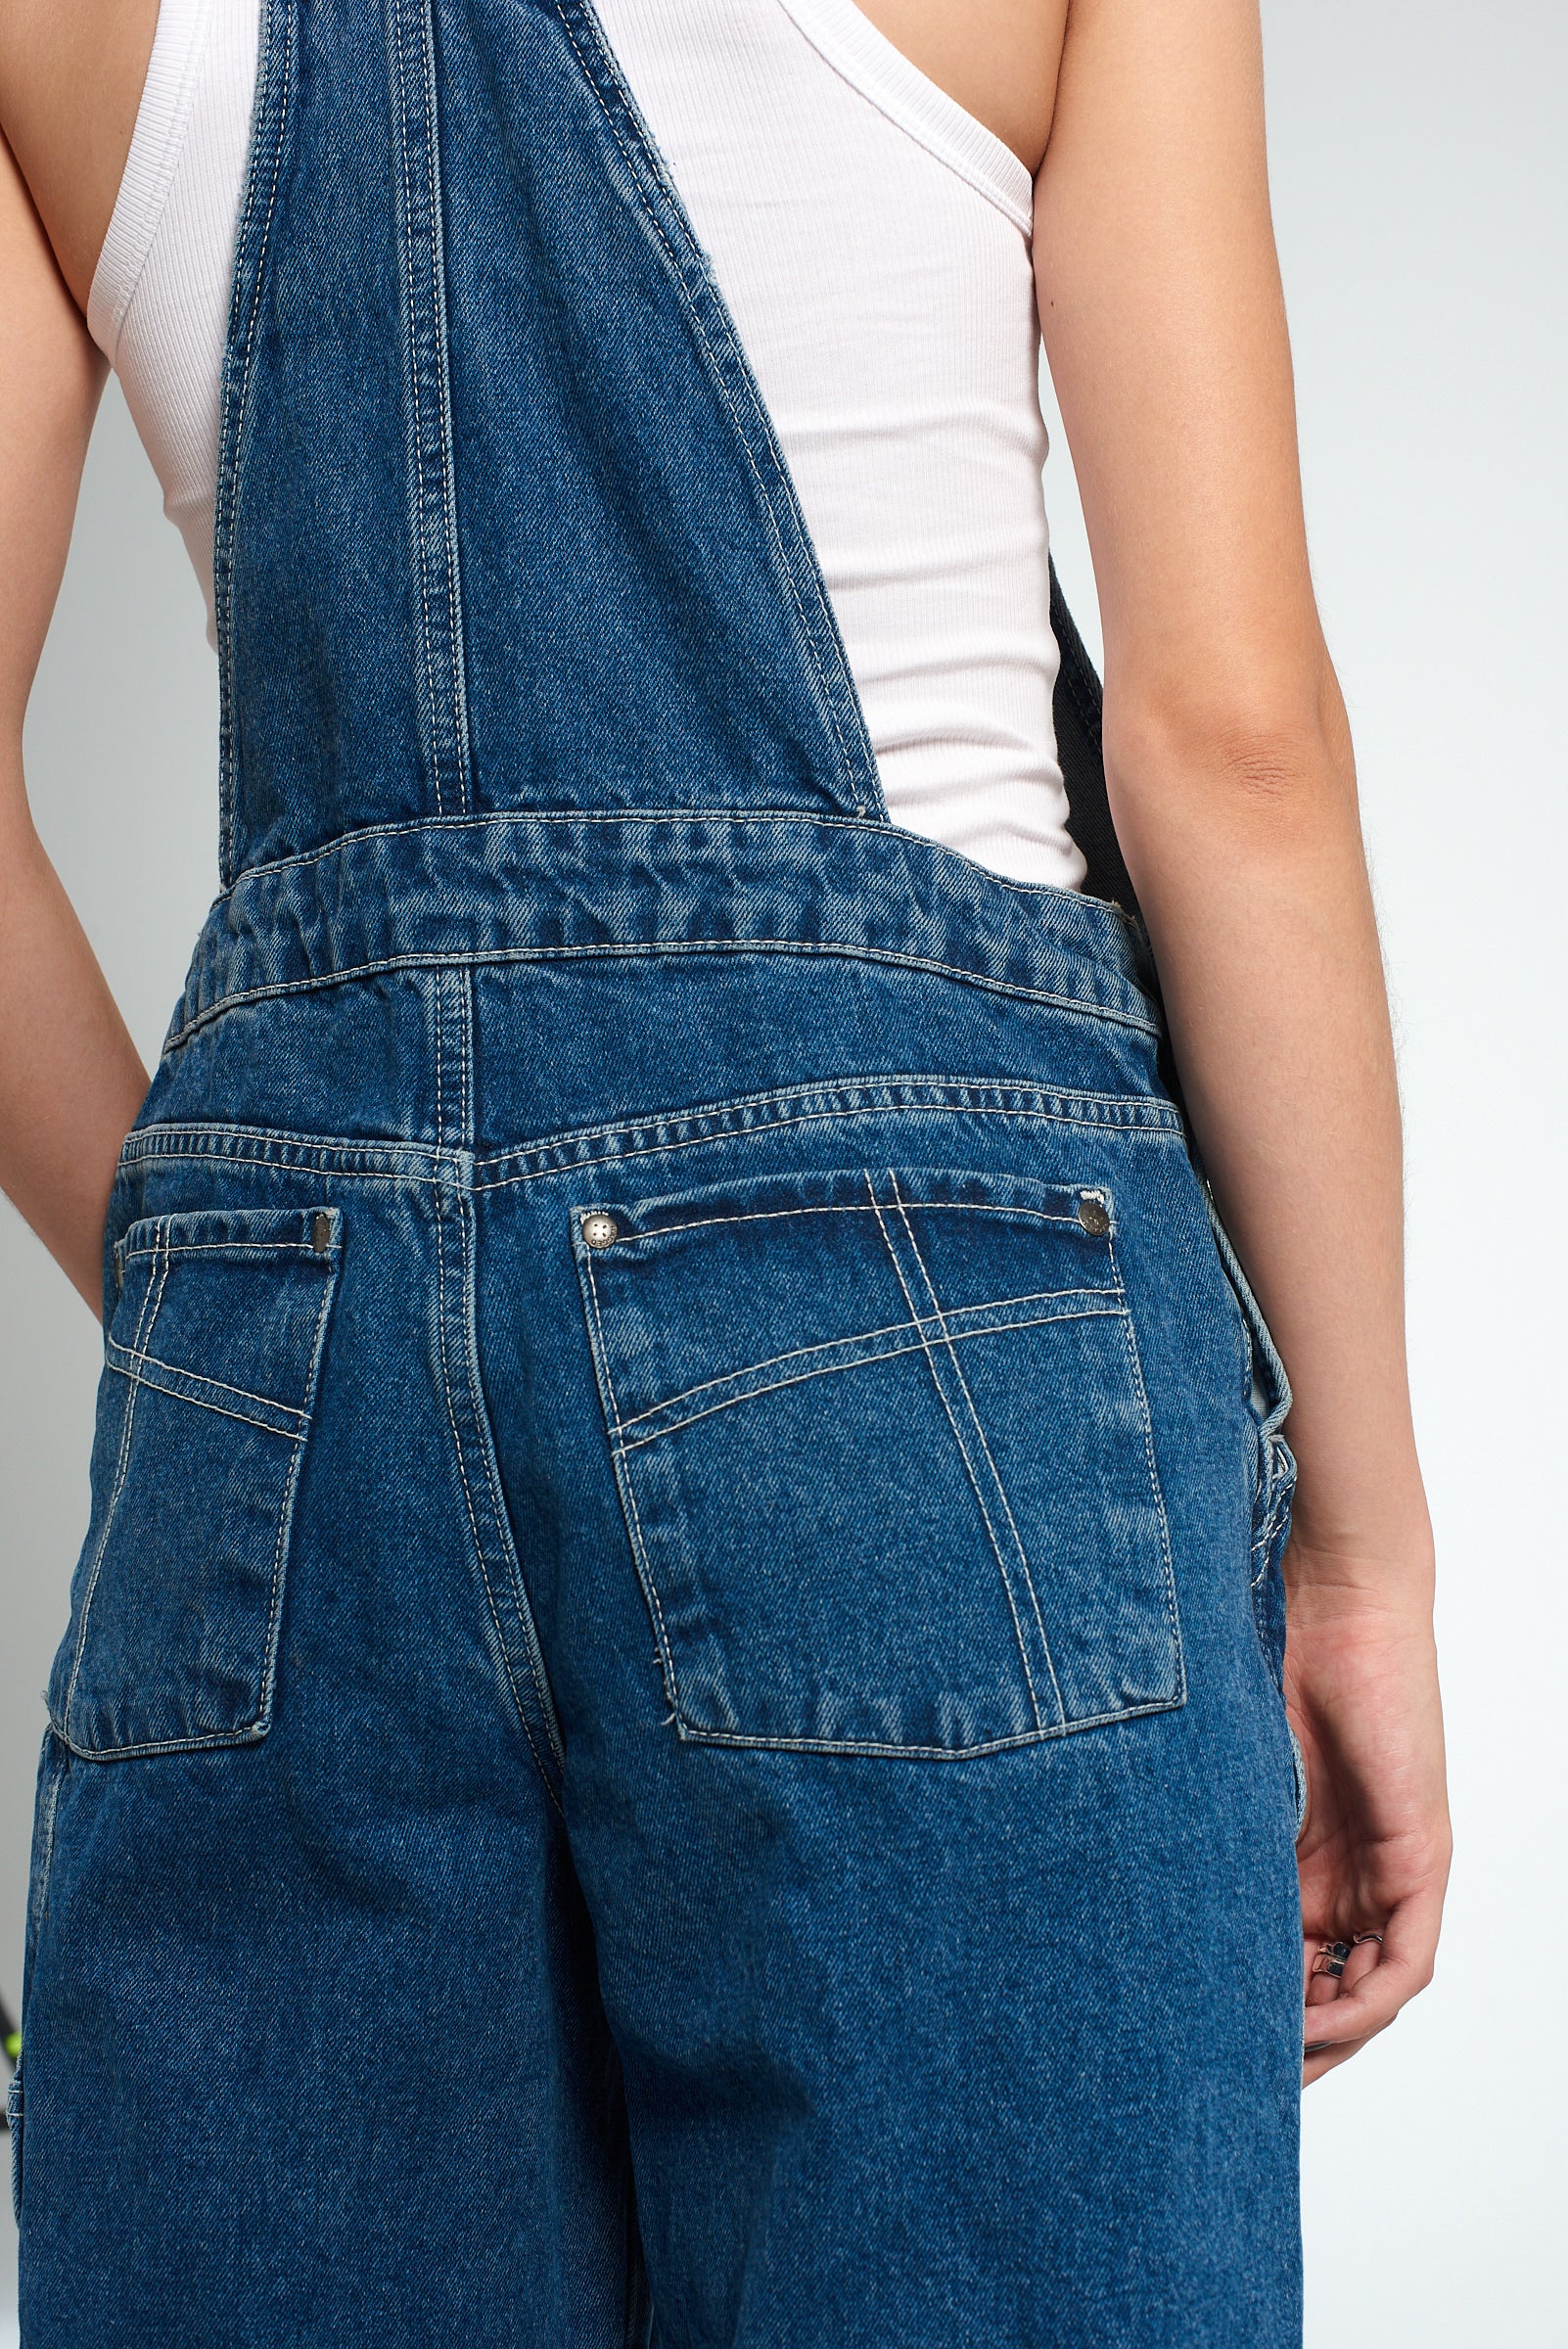 Essentiel Antwerp Cropped Pants for Women - Blue Denim dungarees R13 -  IetpShops Australia